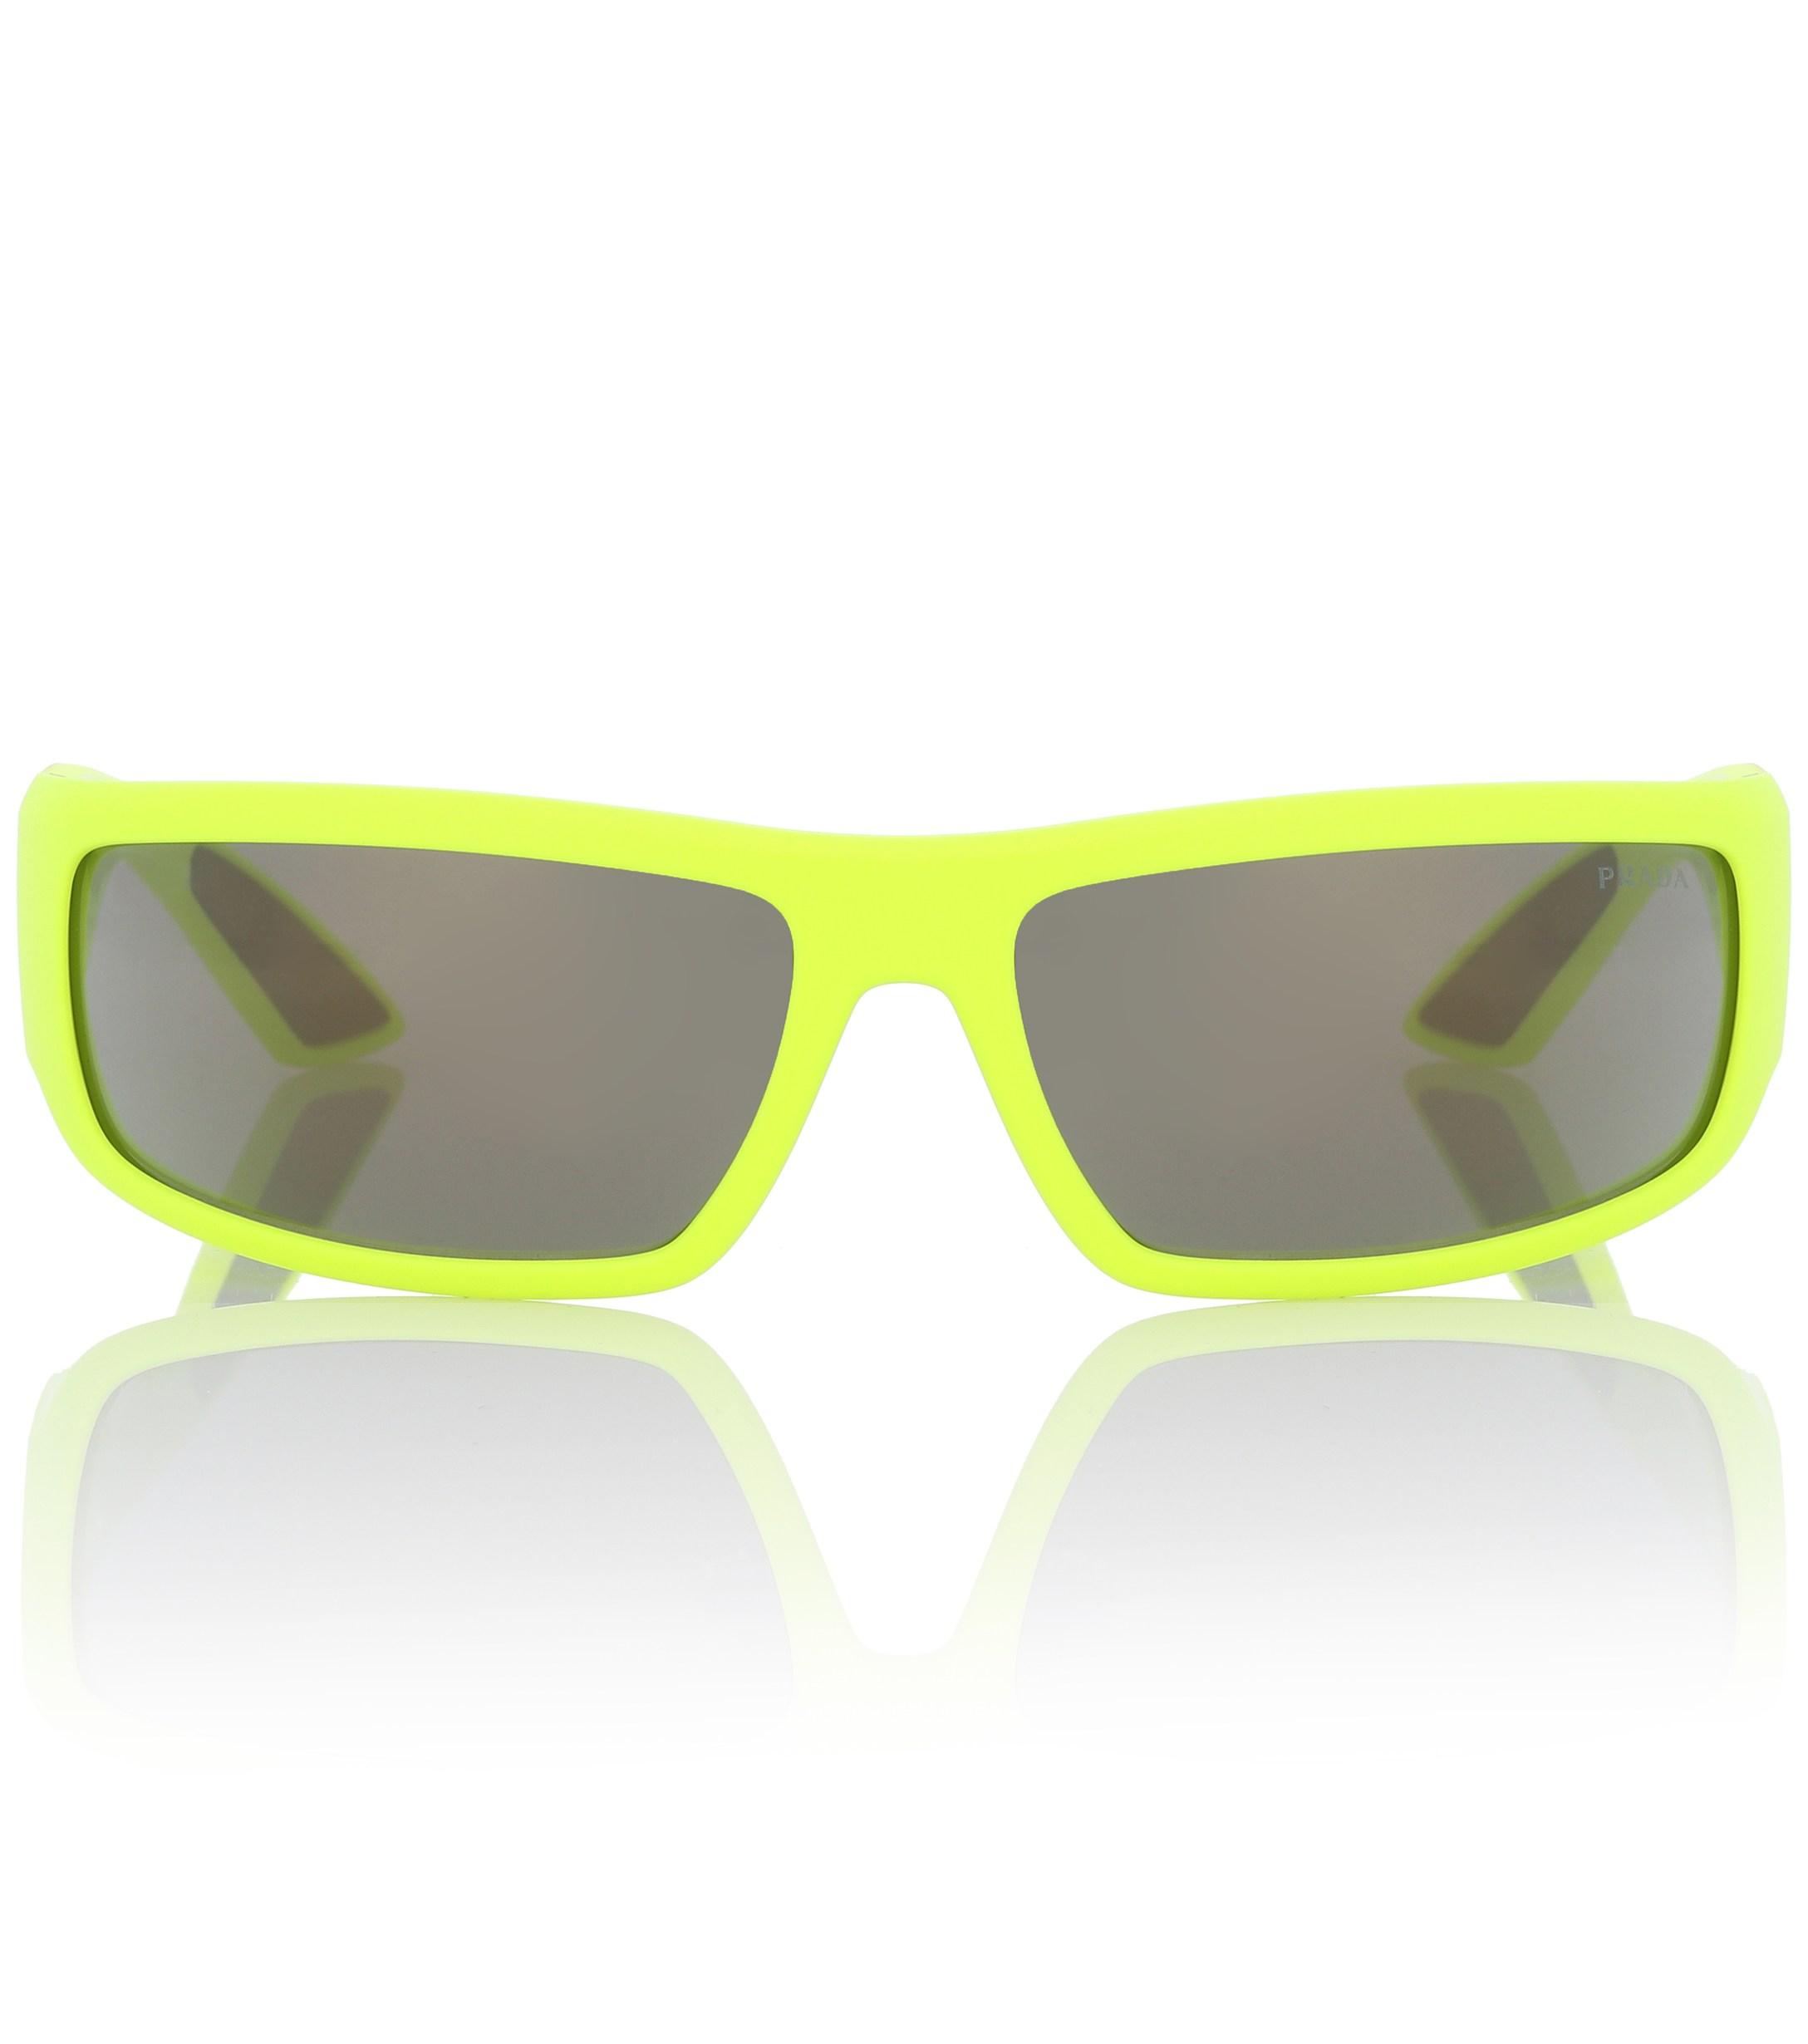 Prada Runway Sunglasses in Yellow - Lyst